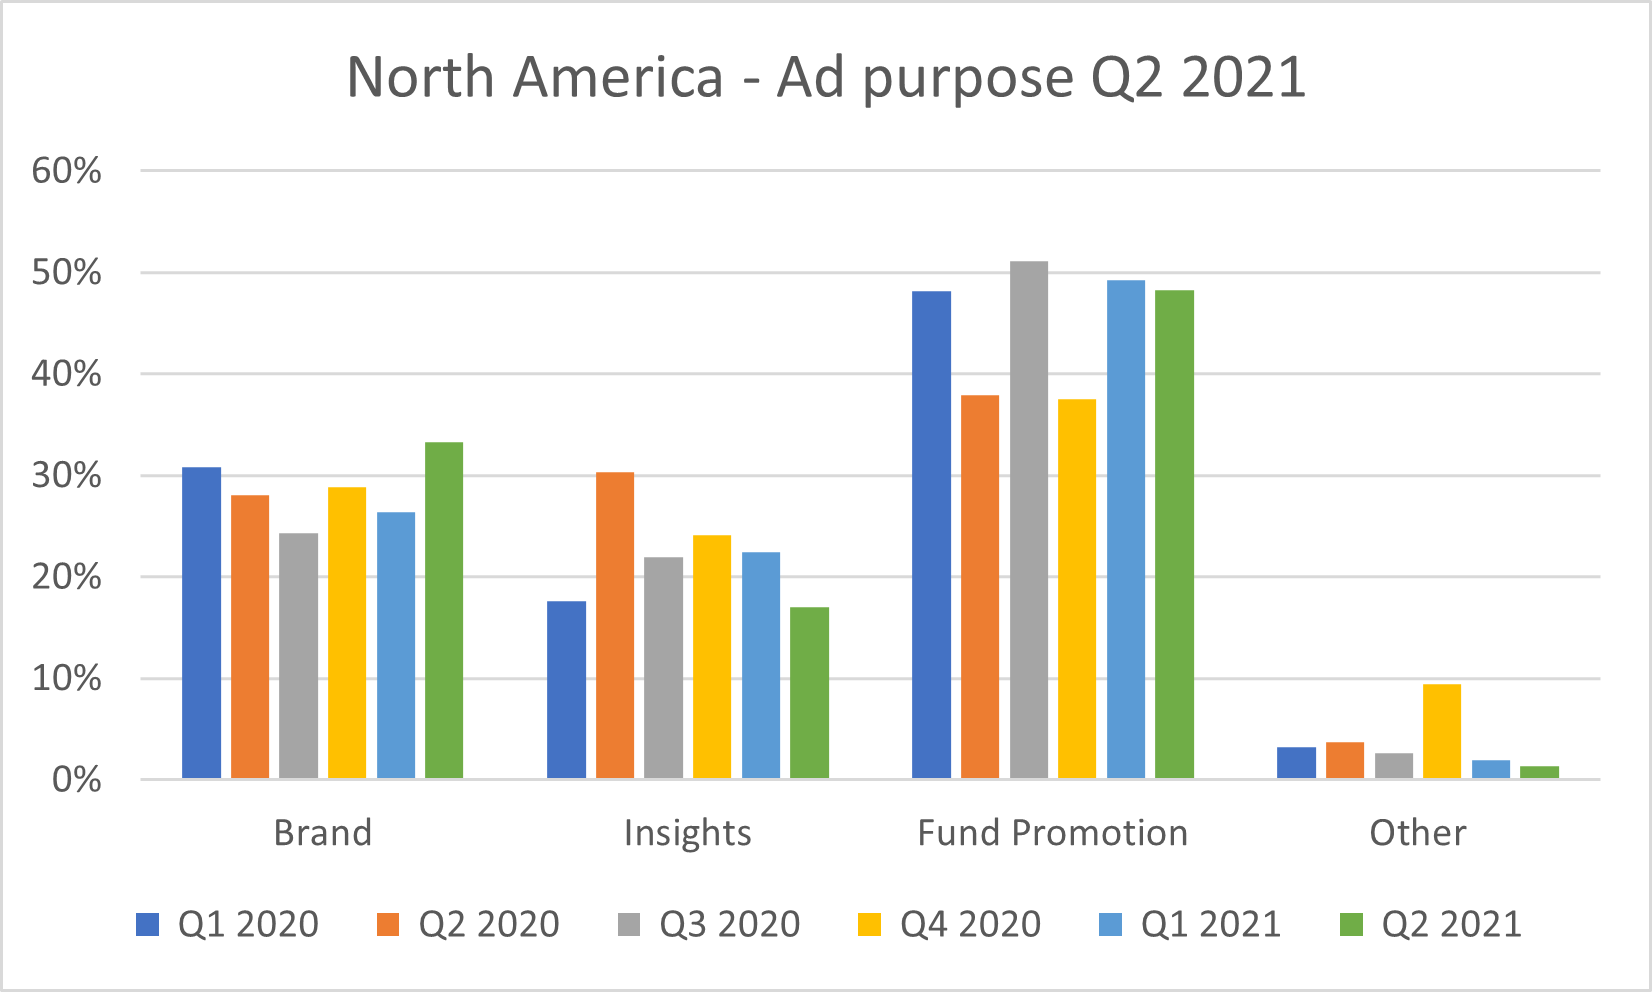 North America ad purpose Q2 2021